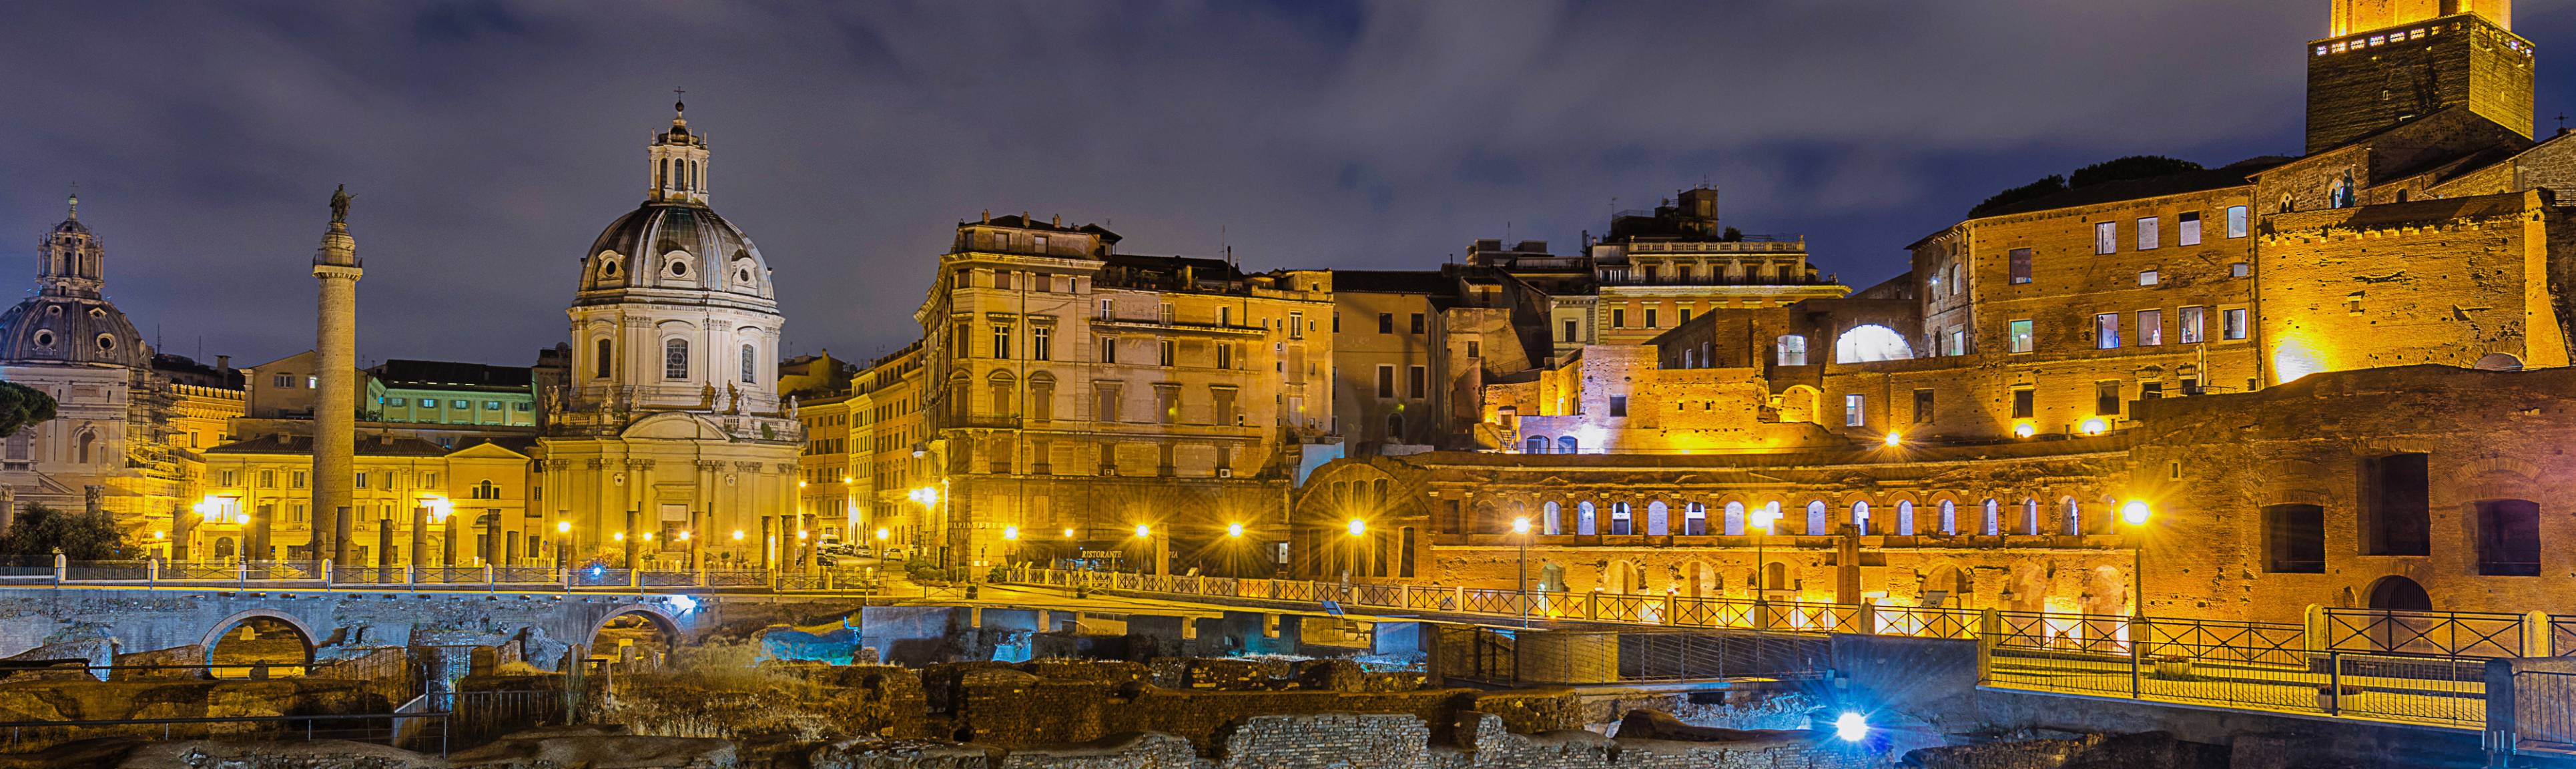 Illuminated view of the ancient Roman Forum